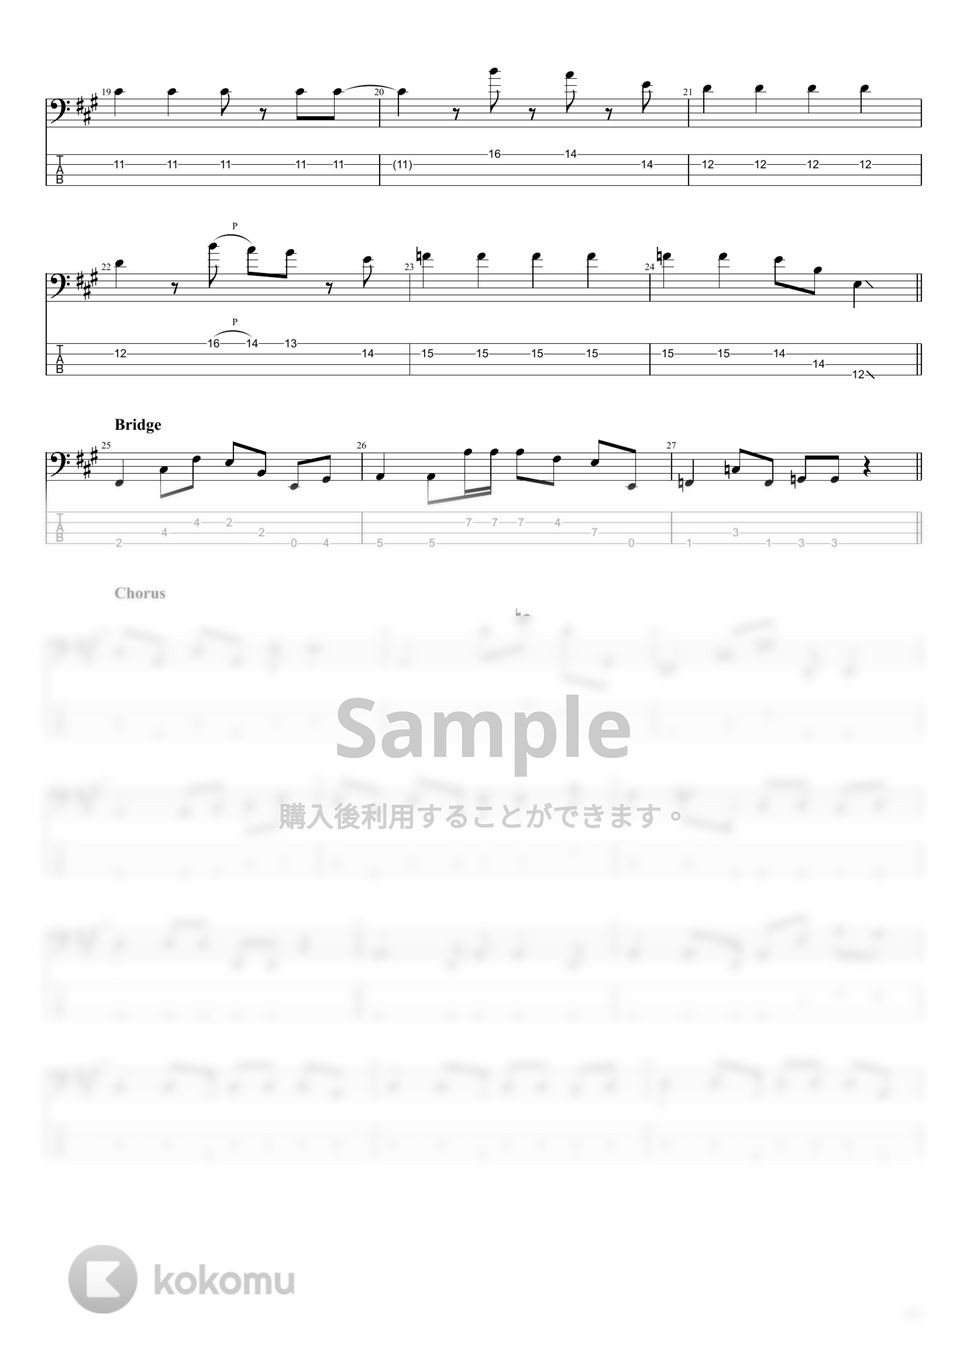 Saucy Dog - Saucy Dog 楽譜集 (10曲) by まっきん